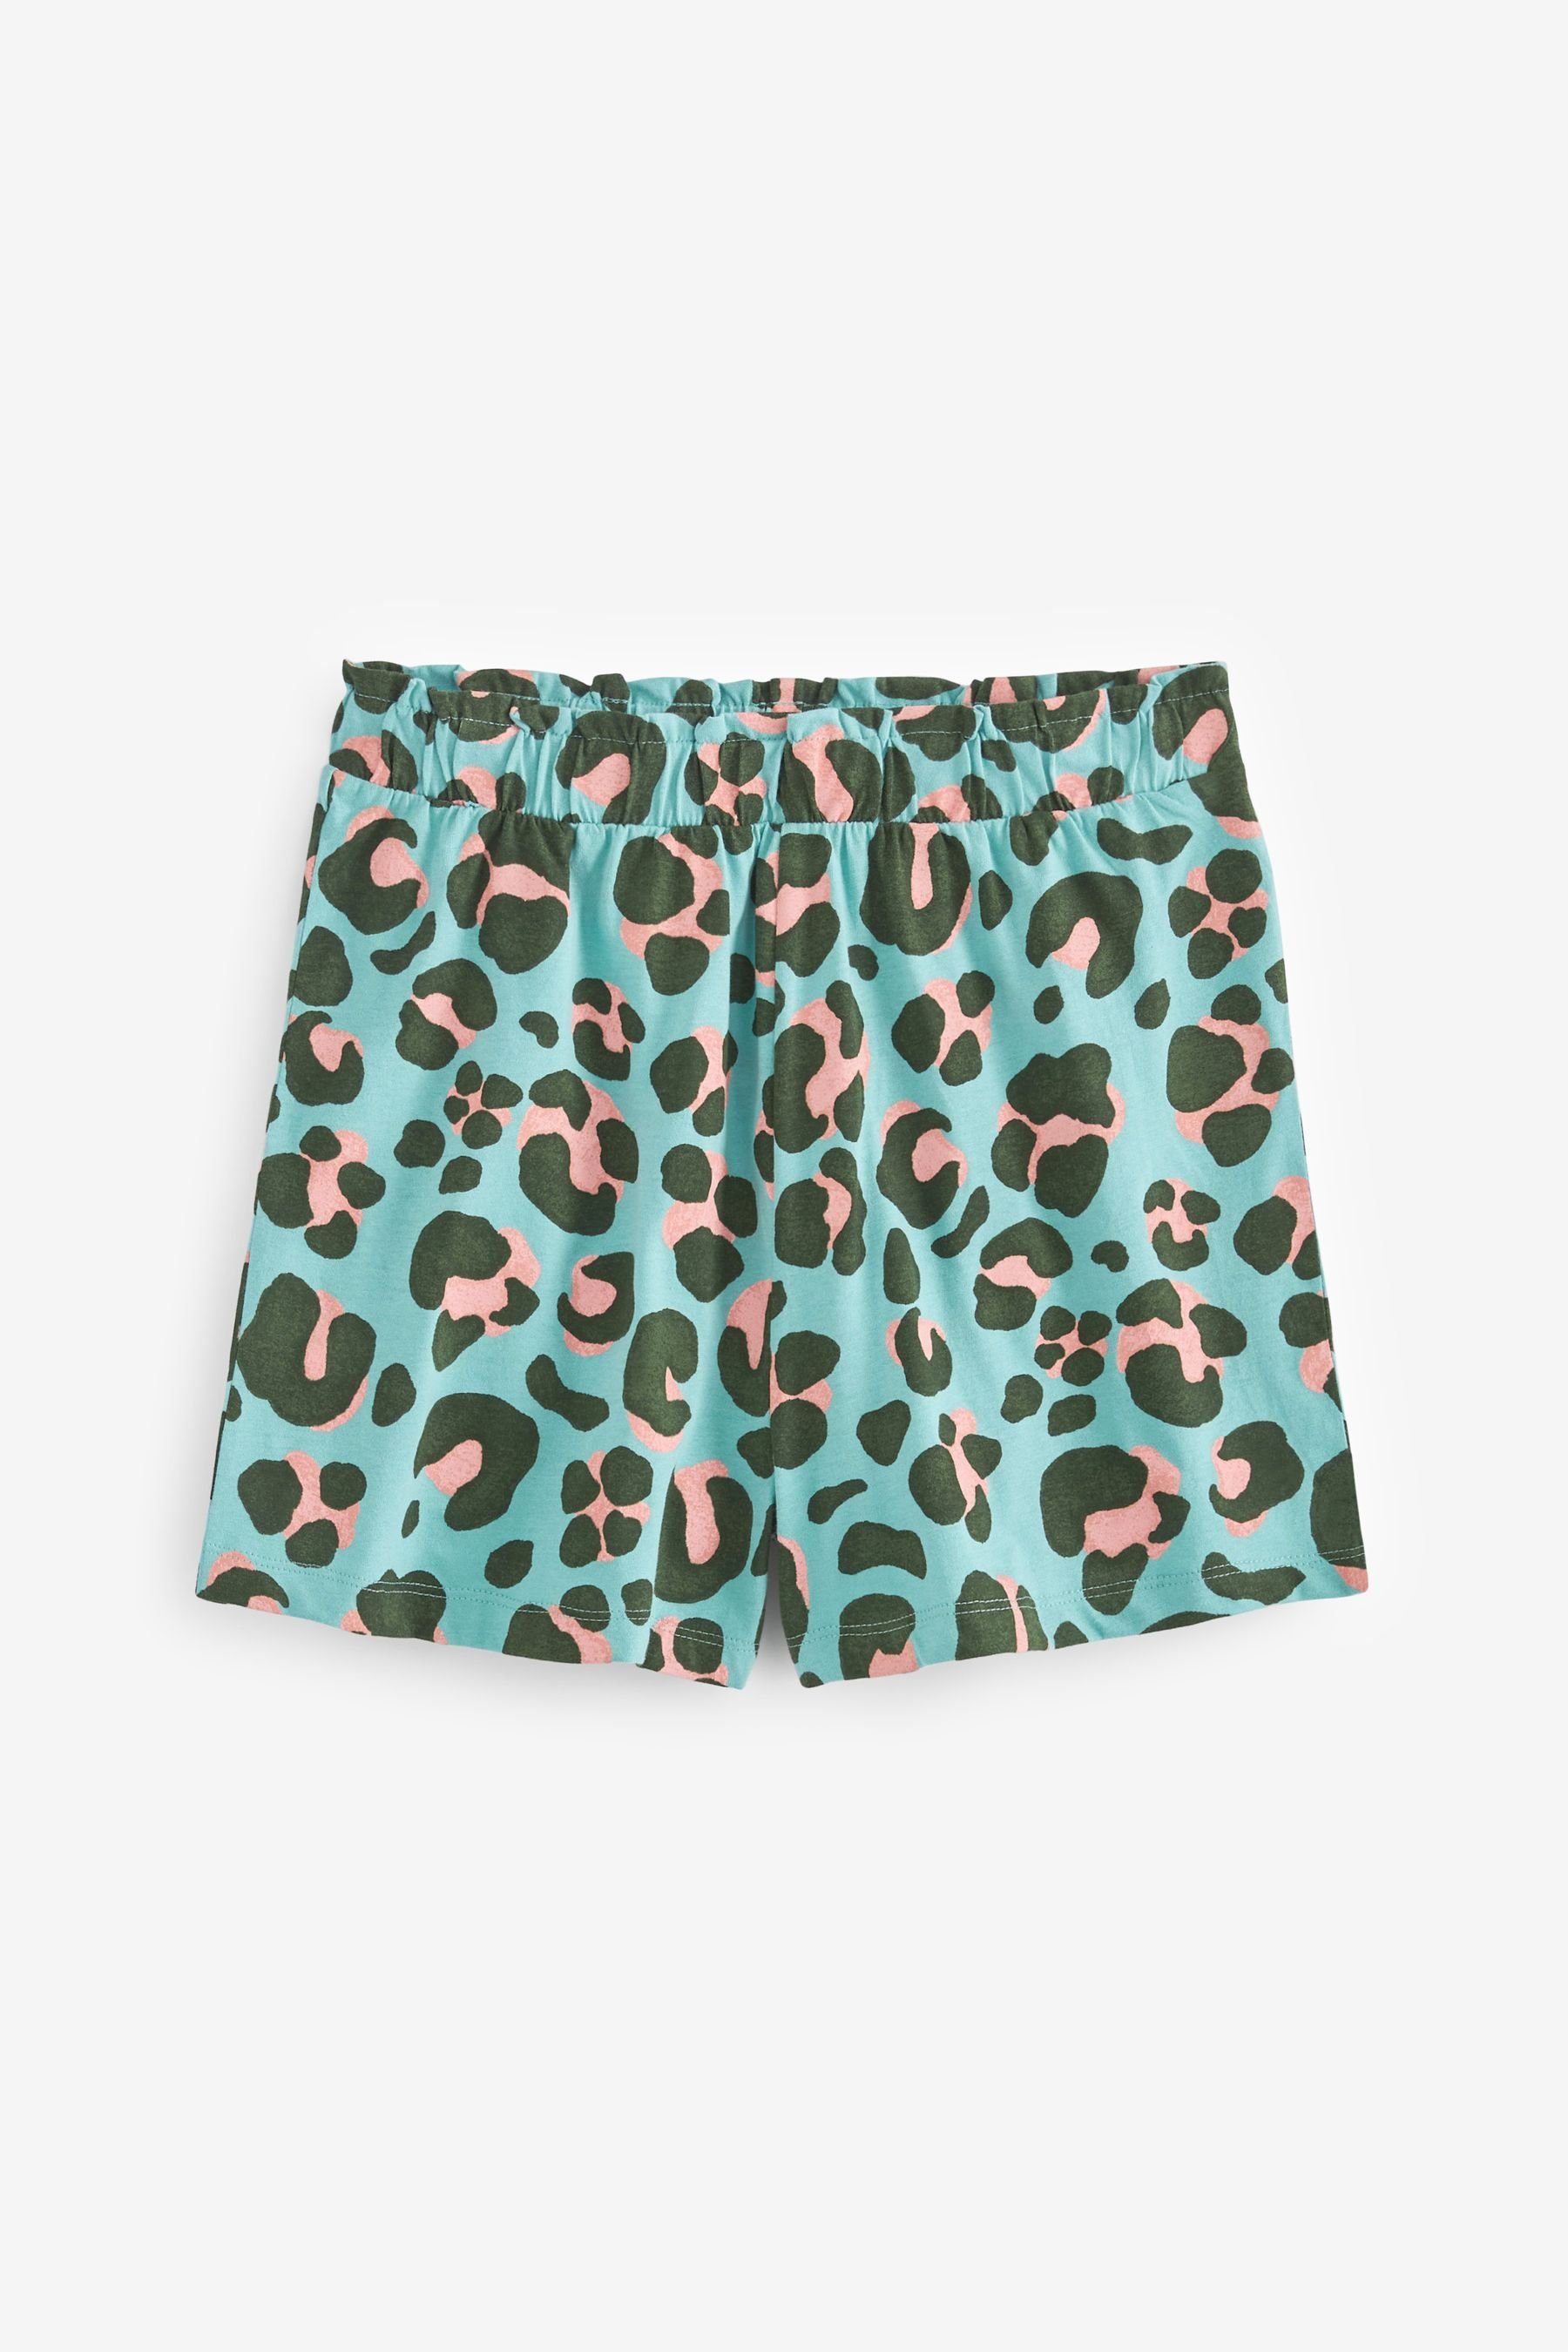 Next Pyjama Baumwolljersey-Pyjama mit tlg) Leopard Set (2 Shorts, Pink/Teal Blue